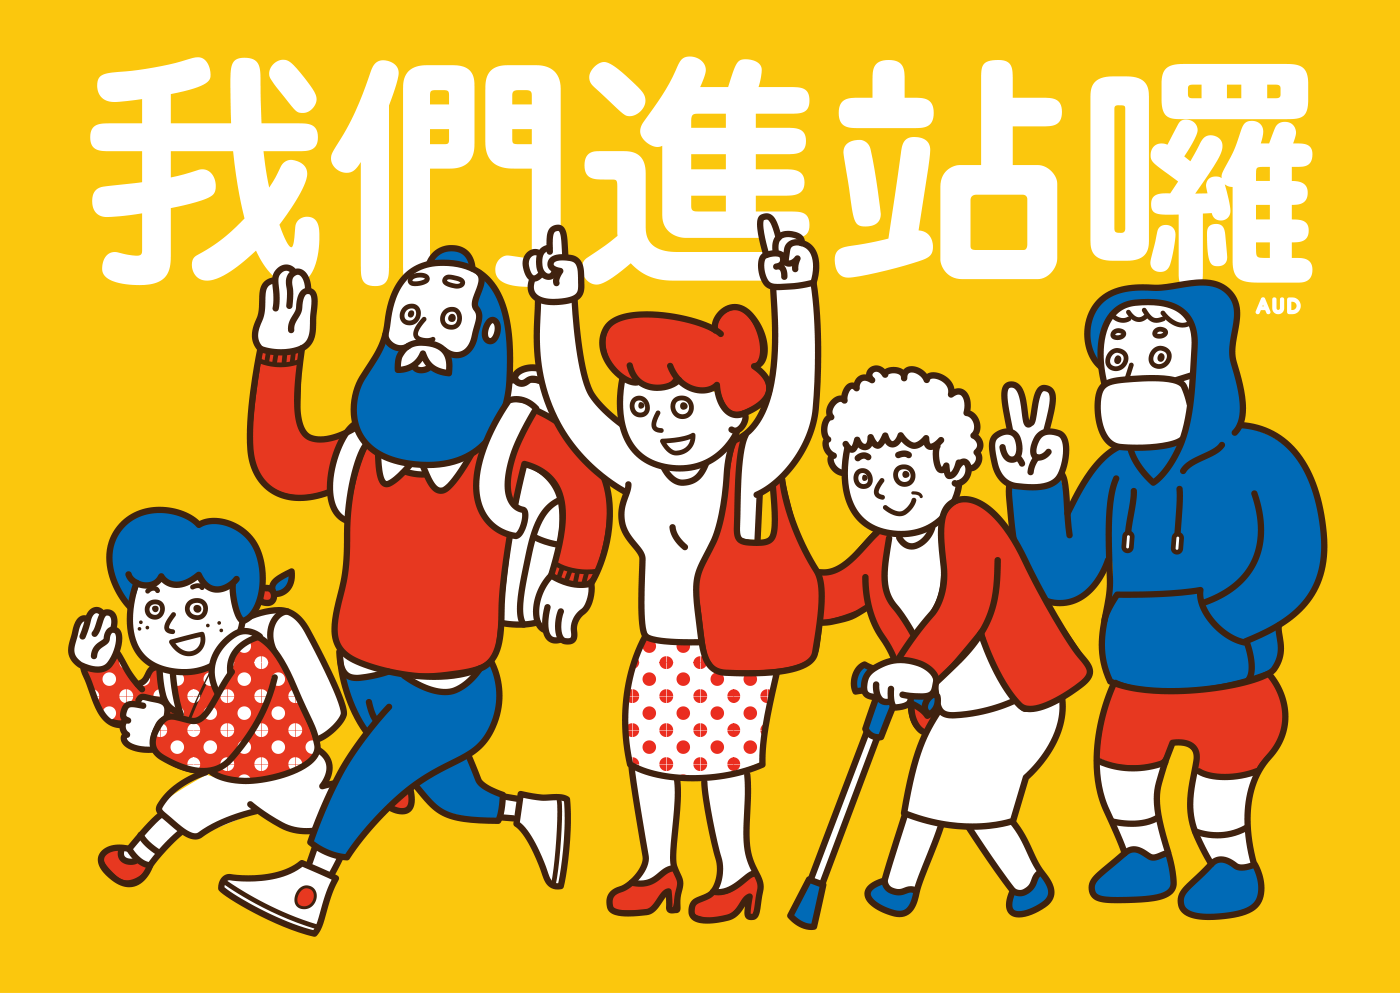 MRT aud audience 台北捷運 poster illustrations design graphic